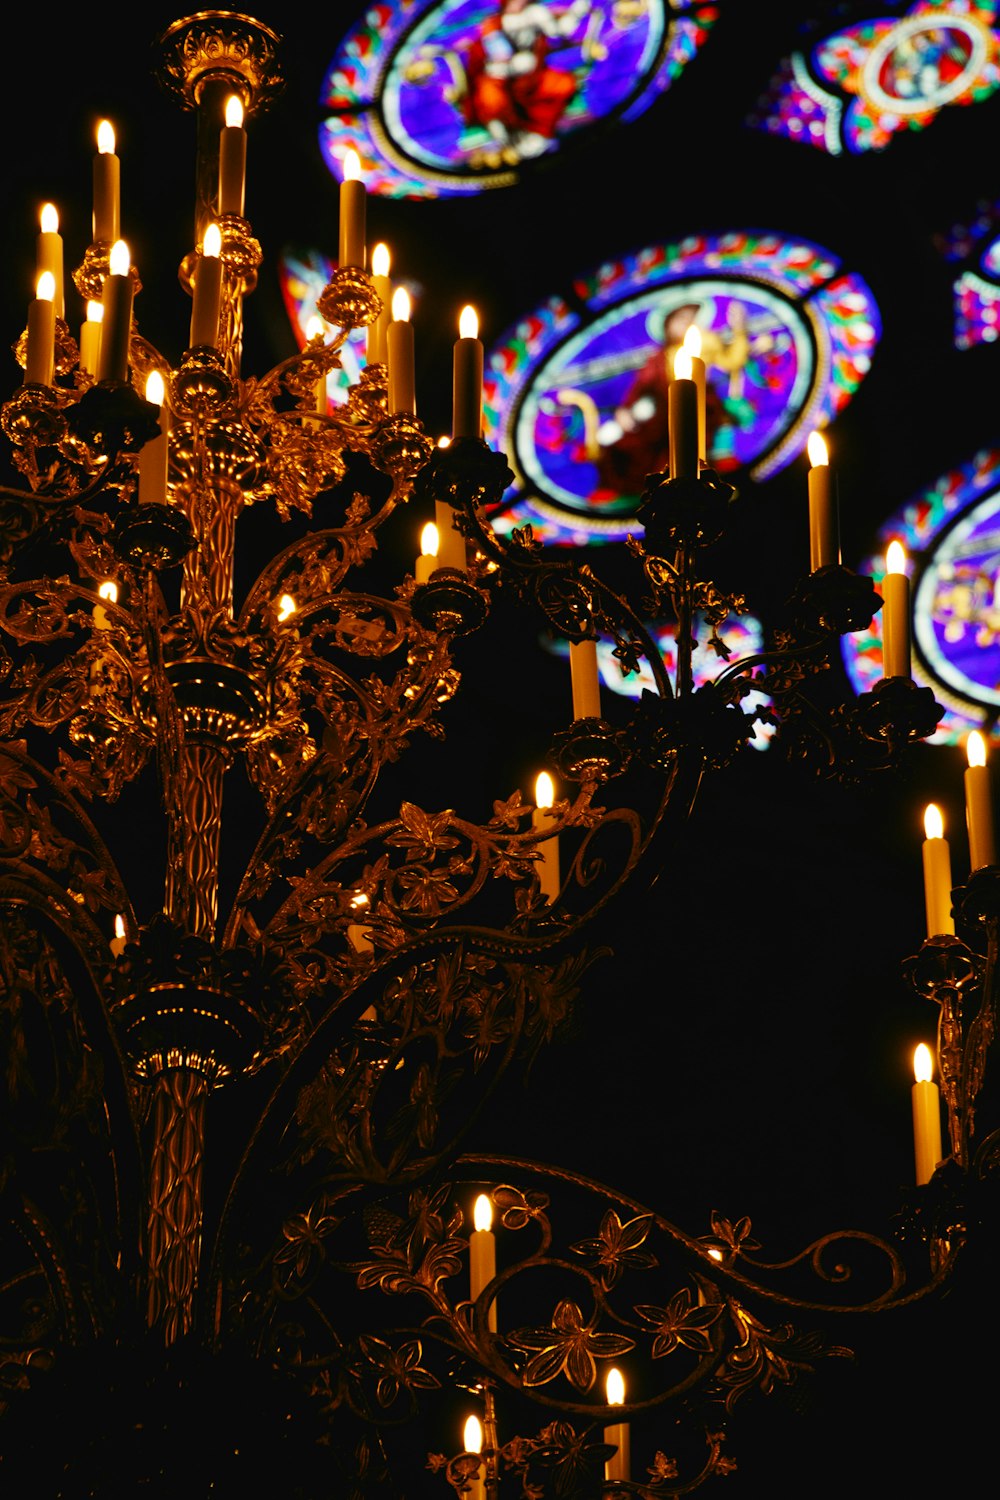 brass uplight chandelier turned on during nighttime